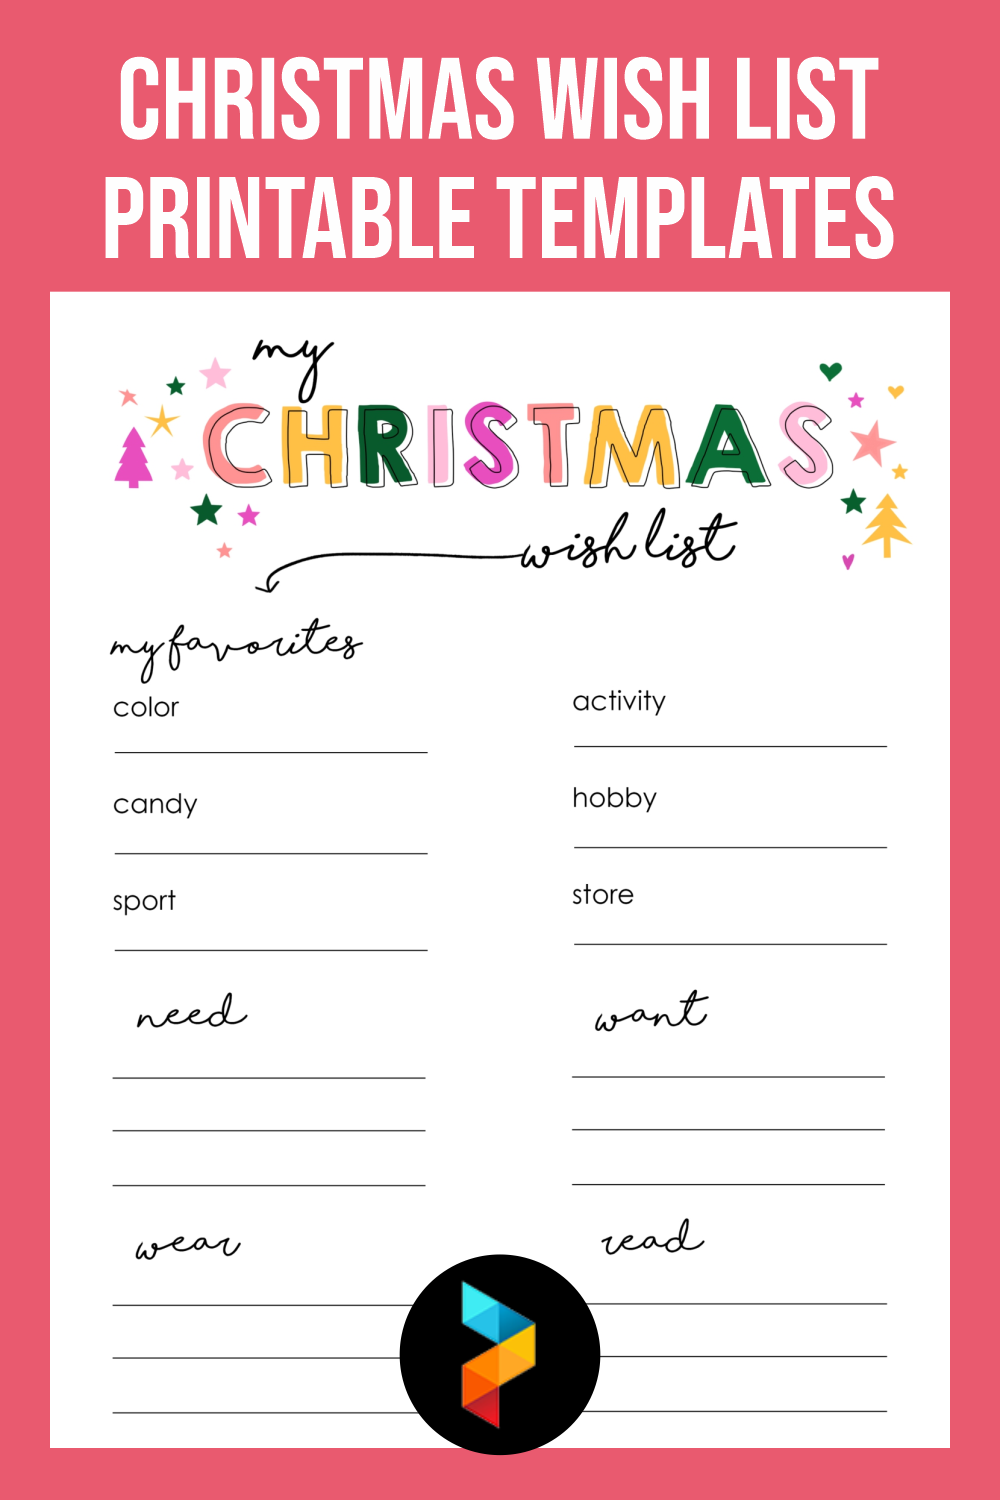 15 Best Christmas Wish List Free Printable Templates - printablee.com